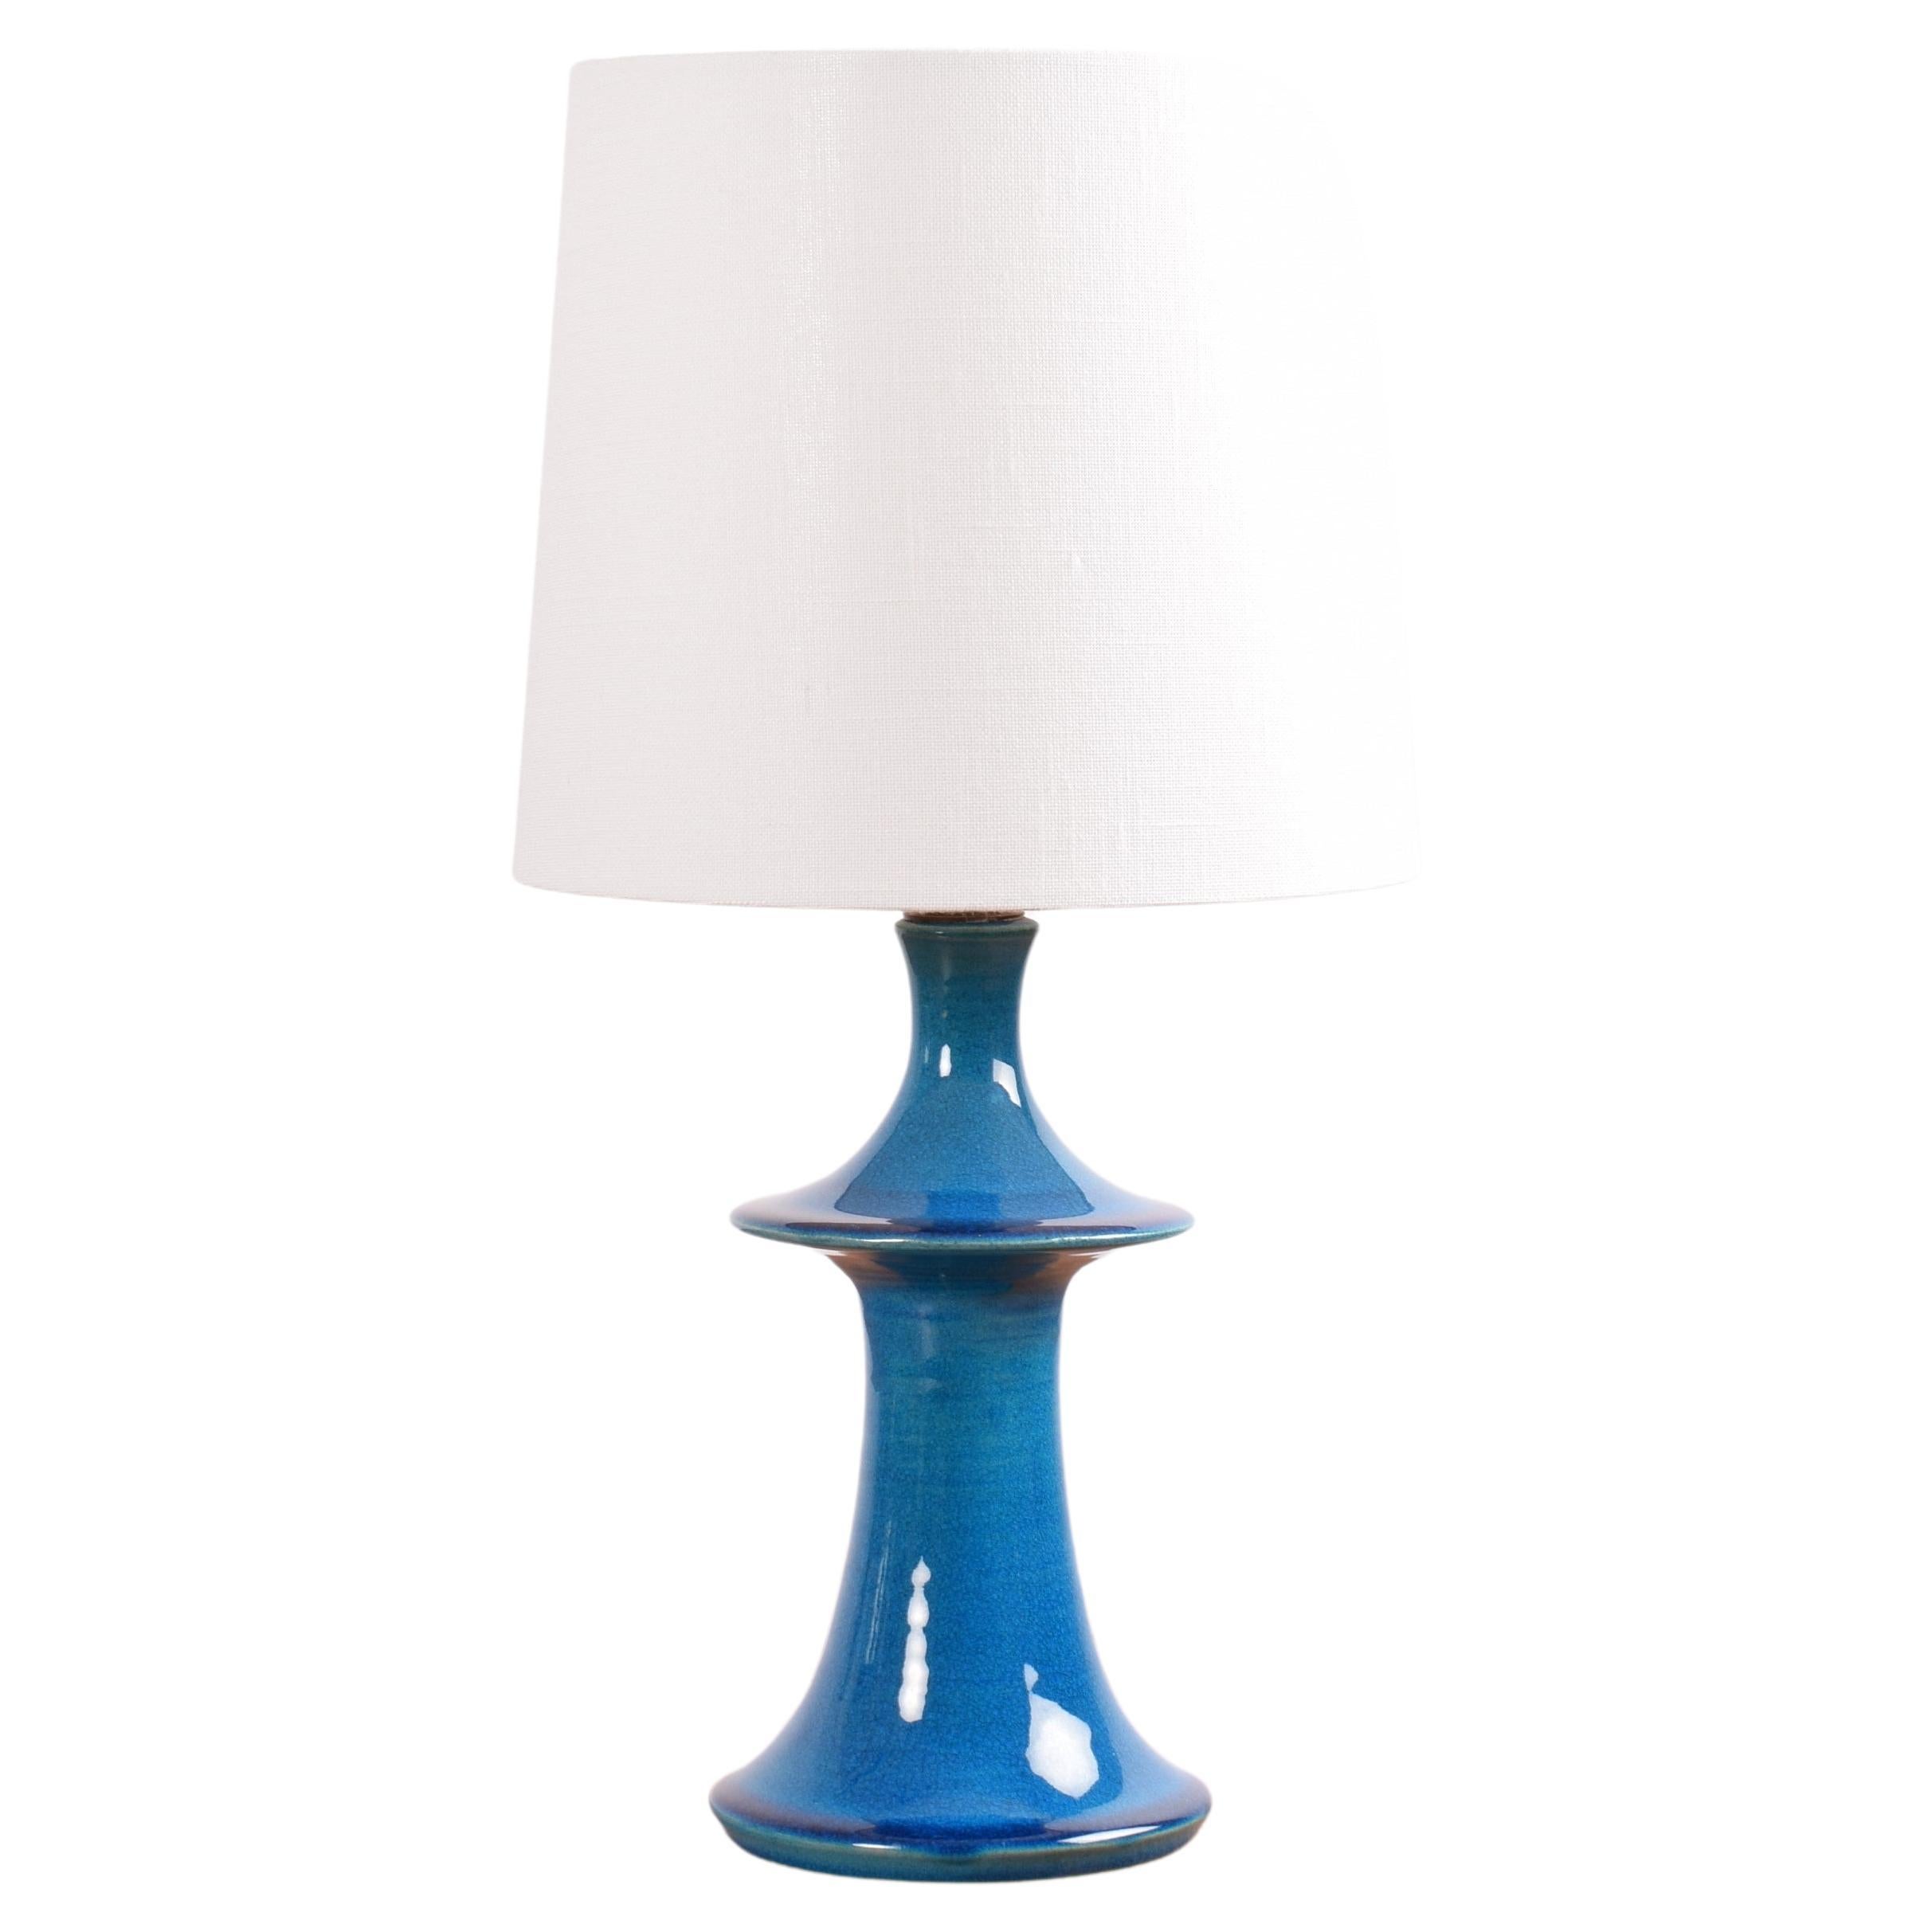 Danish Modern Kähler Sculptural Table Lamp Turquoise Blue, 1960s Ceramic Design